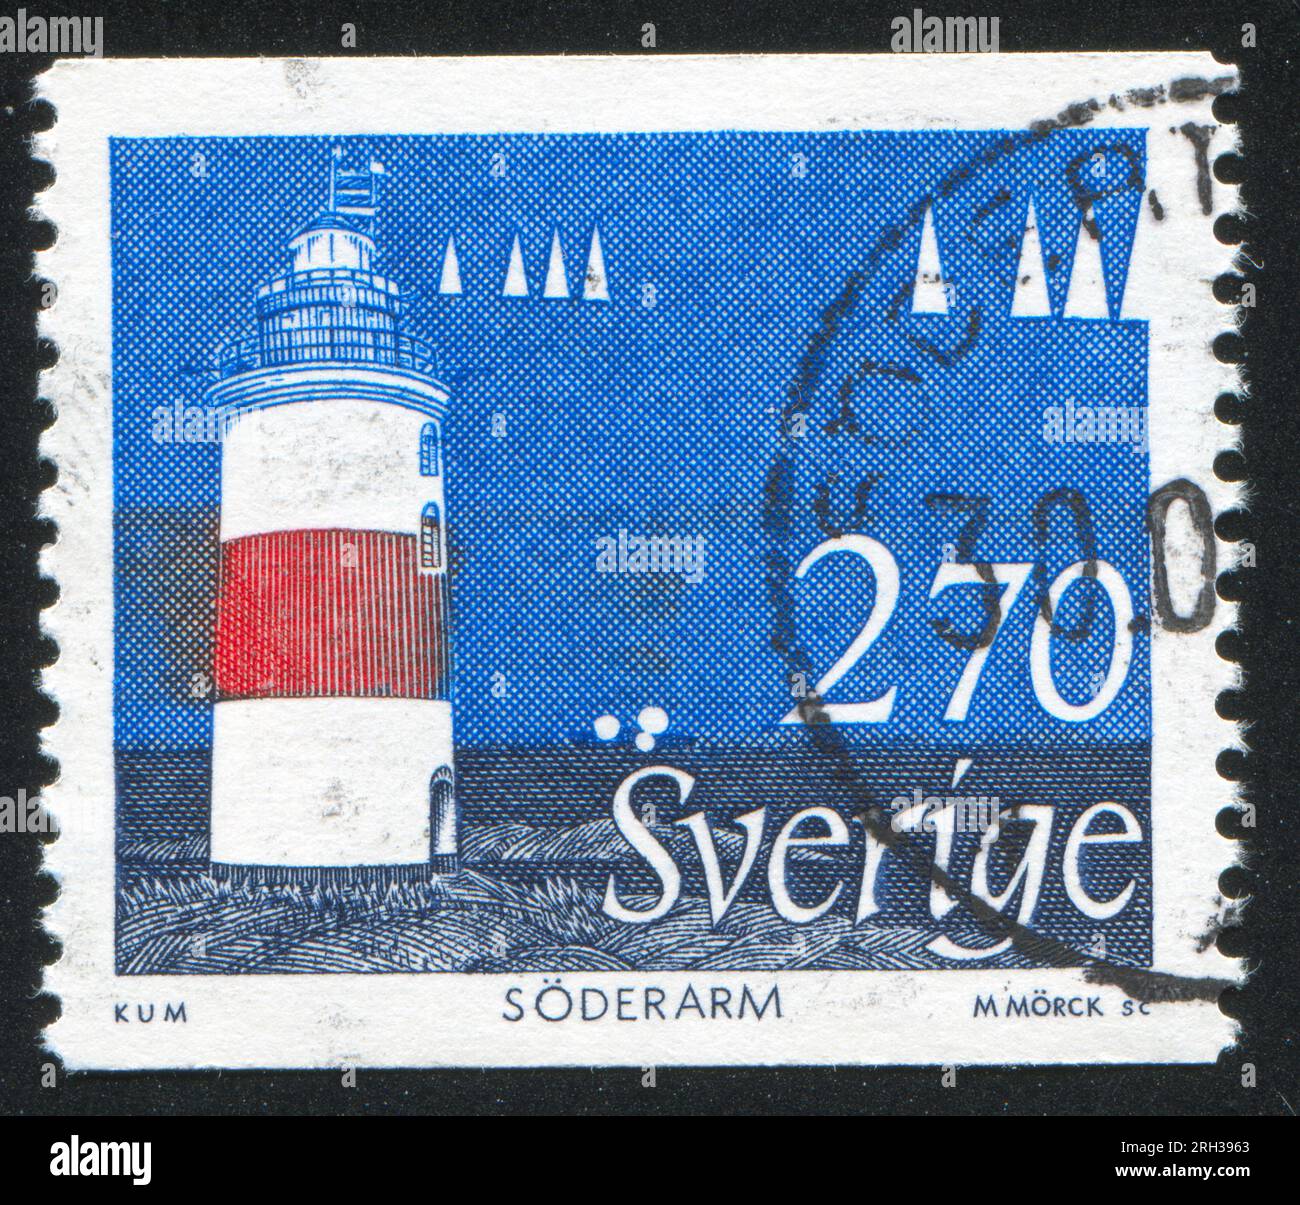 SUÈDE - CIRCA 1989 : timbre imprimé par la Suède, montre Soderarm, Uppland, phare, circa 1989 Banque D'Images